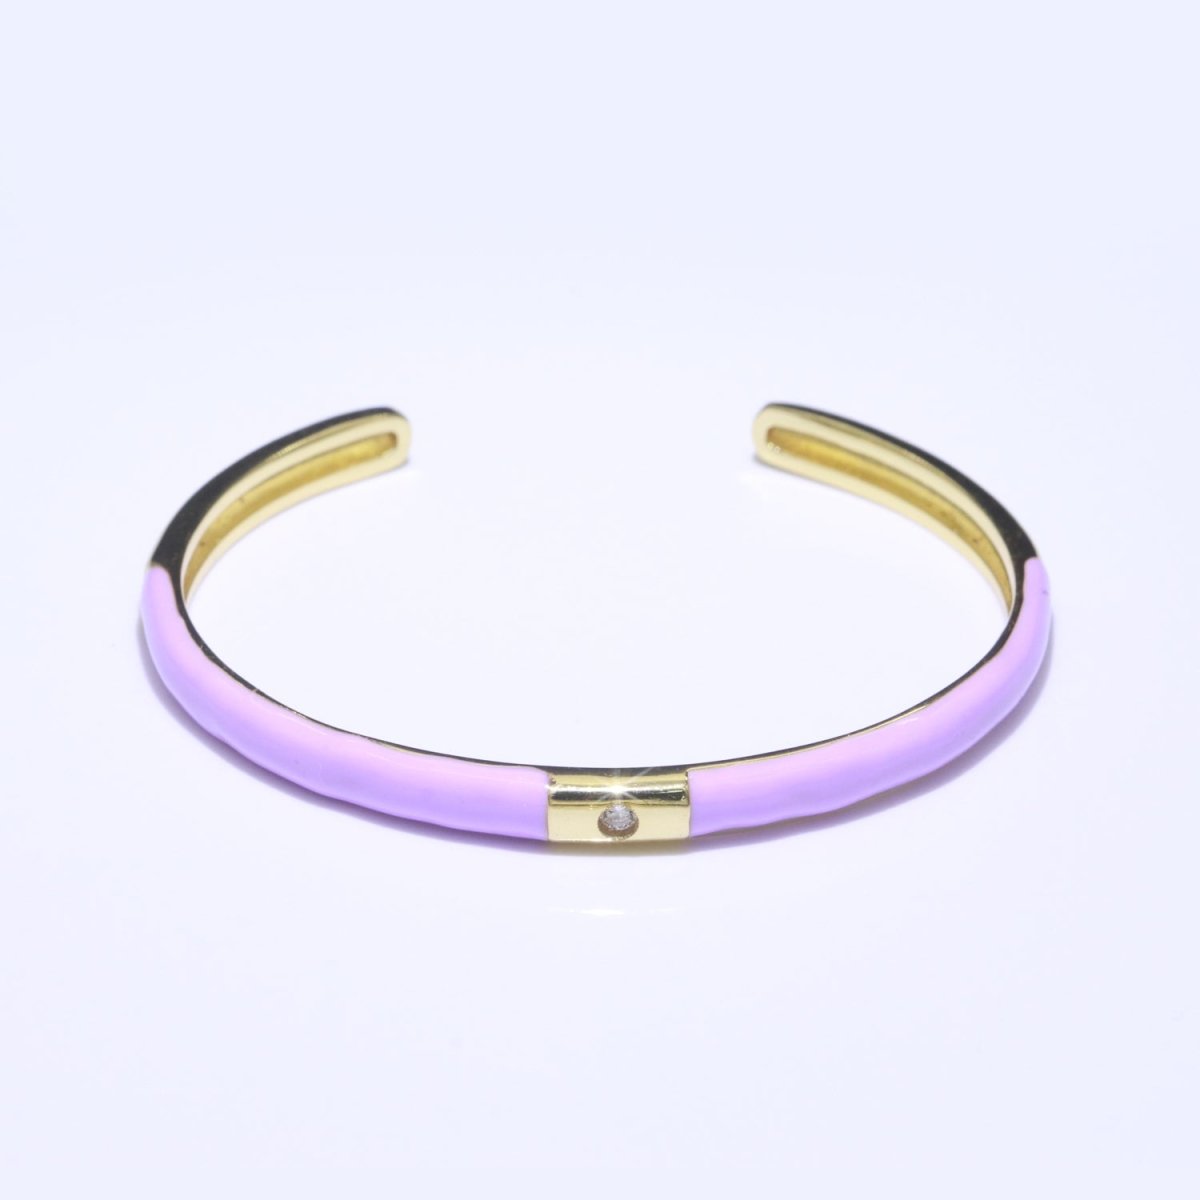 Colorful Enamel Stackable Bangle Bracelet, 14K Gold Filled CZ Enamel Bangle Fashion Jewelry | WA-094 to WA-103 Clearance Pricing - DLUXCA